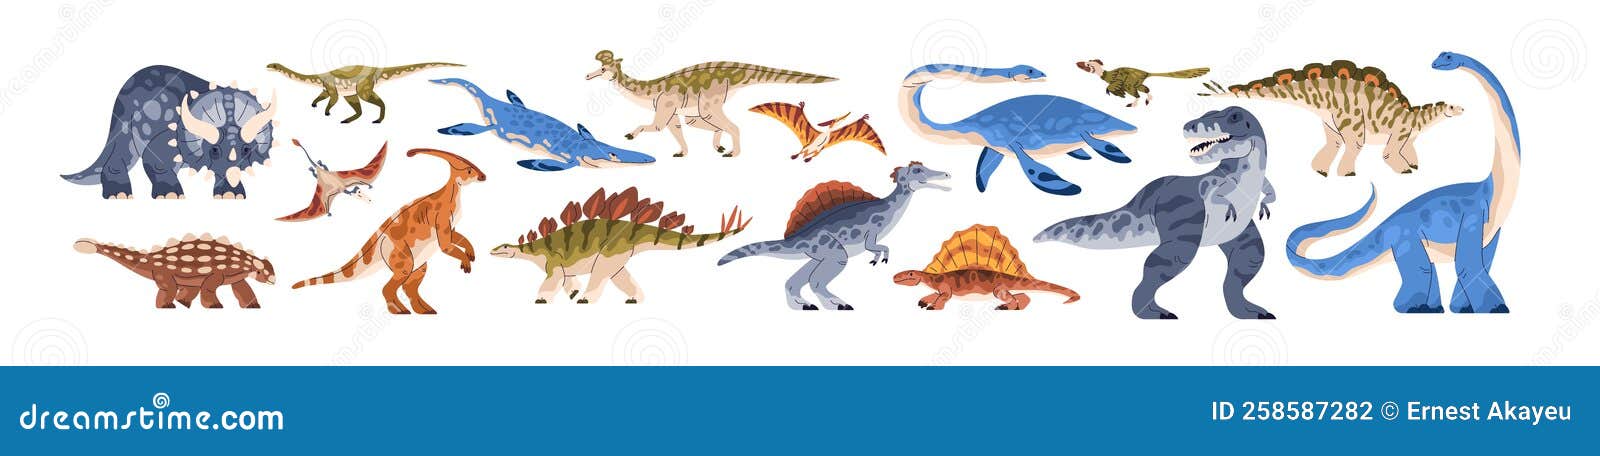 dinosaurs set. ancient reptile animals of prehistory jurassic period. different species of prehistoric extinct reptilian